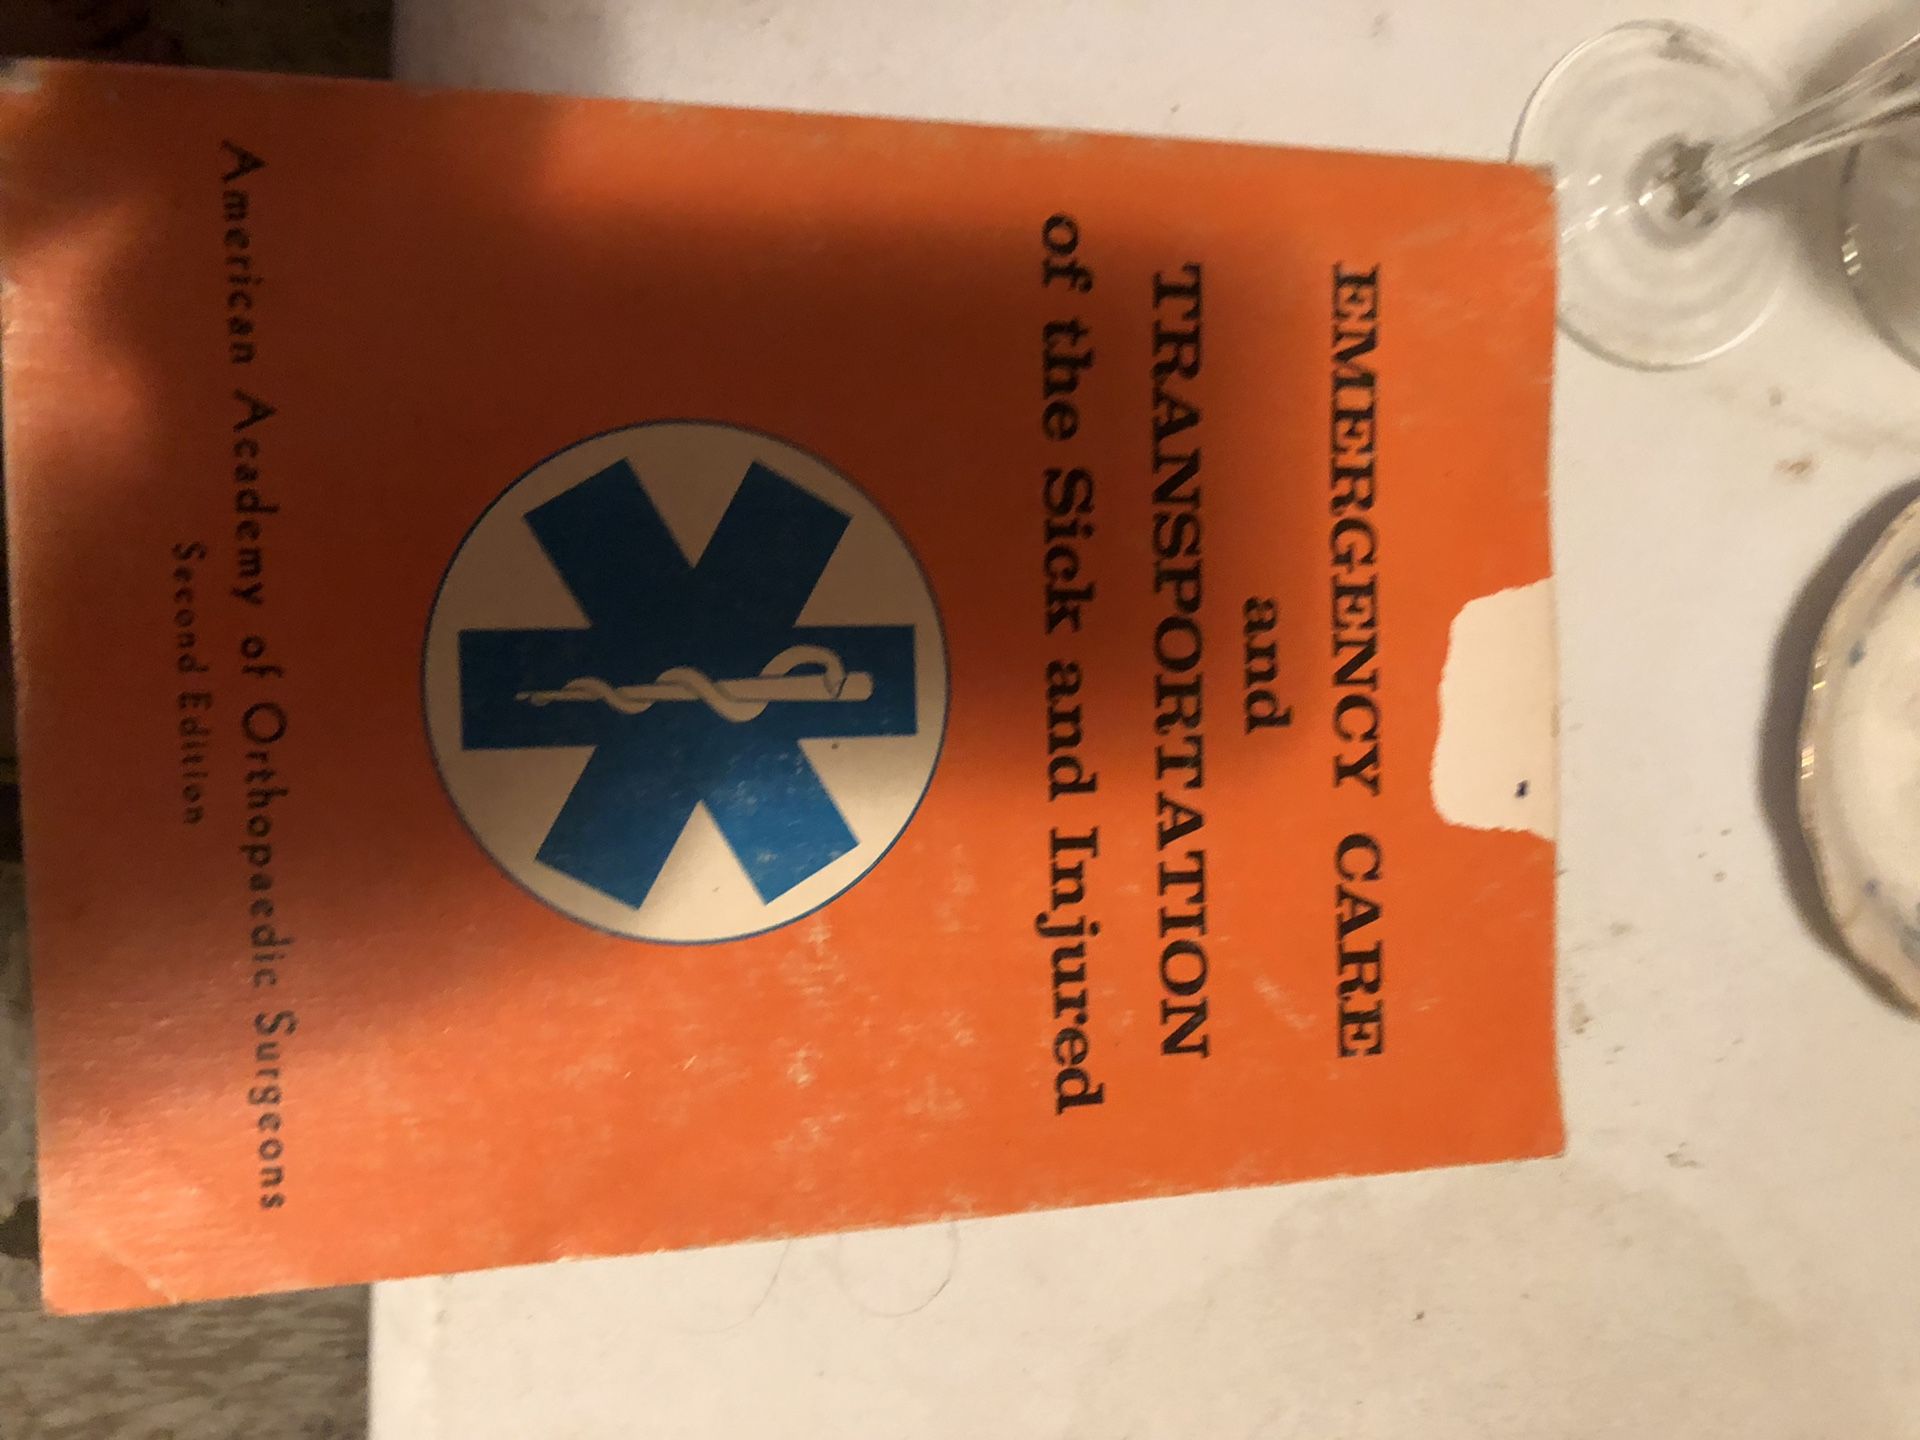 Medical book